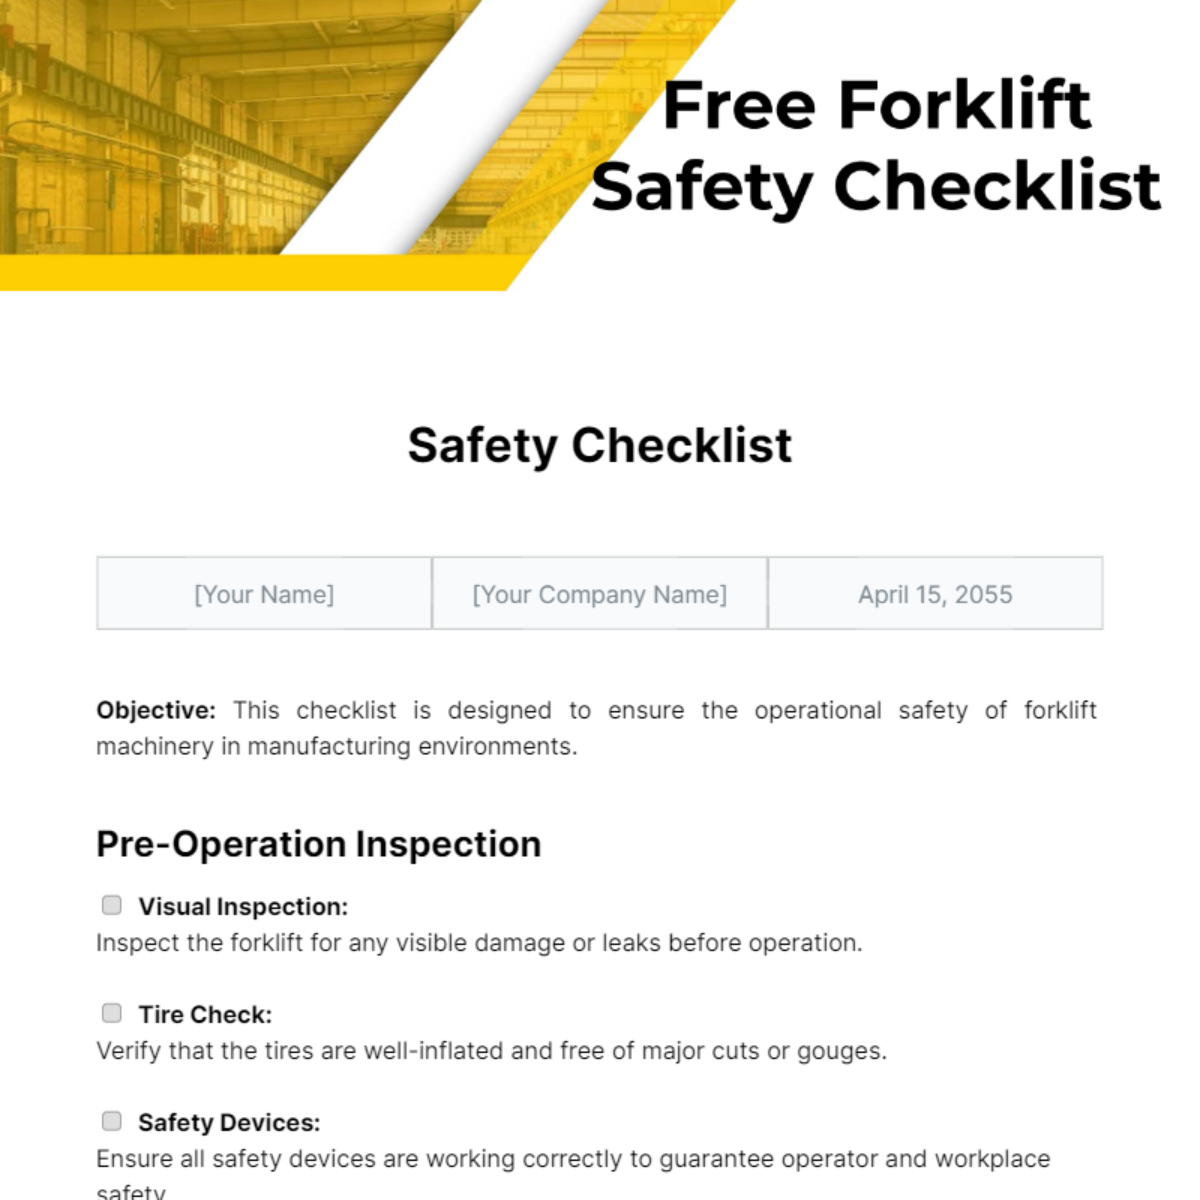 Free Forklift Safety Checklist Template